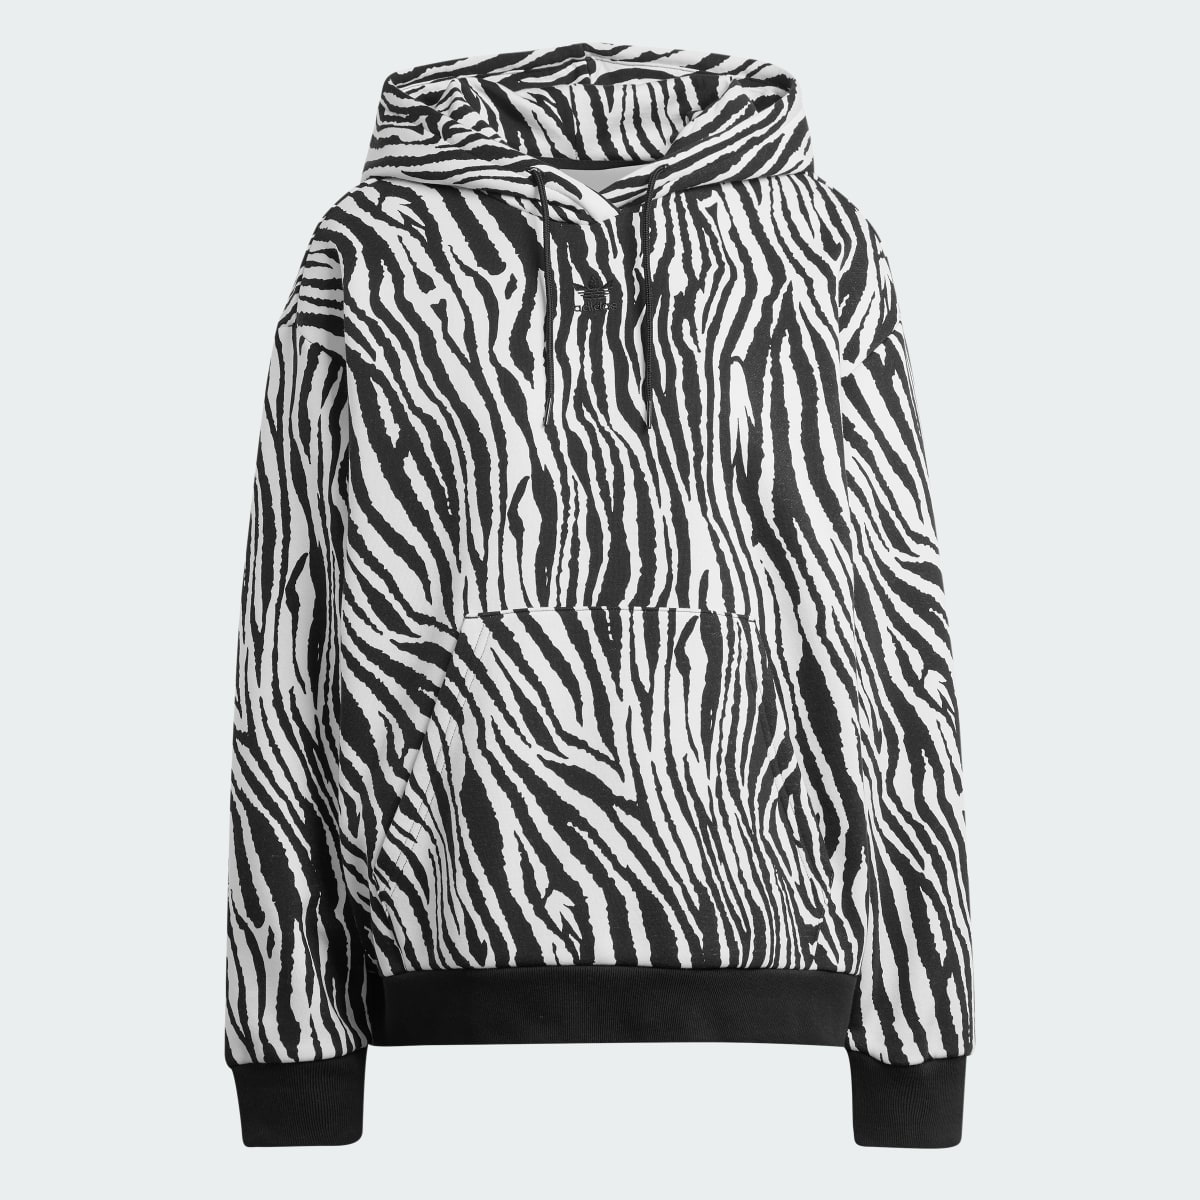 Adidas Allover Zebra Animal Print Essentials Hoodie. 5